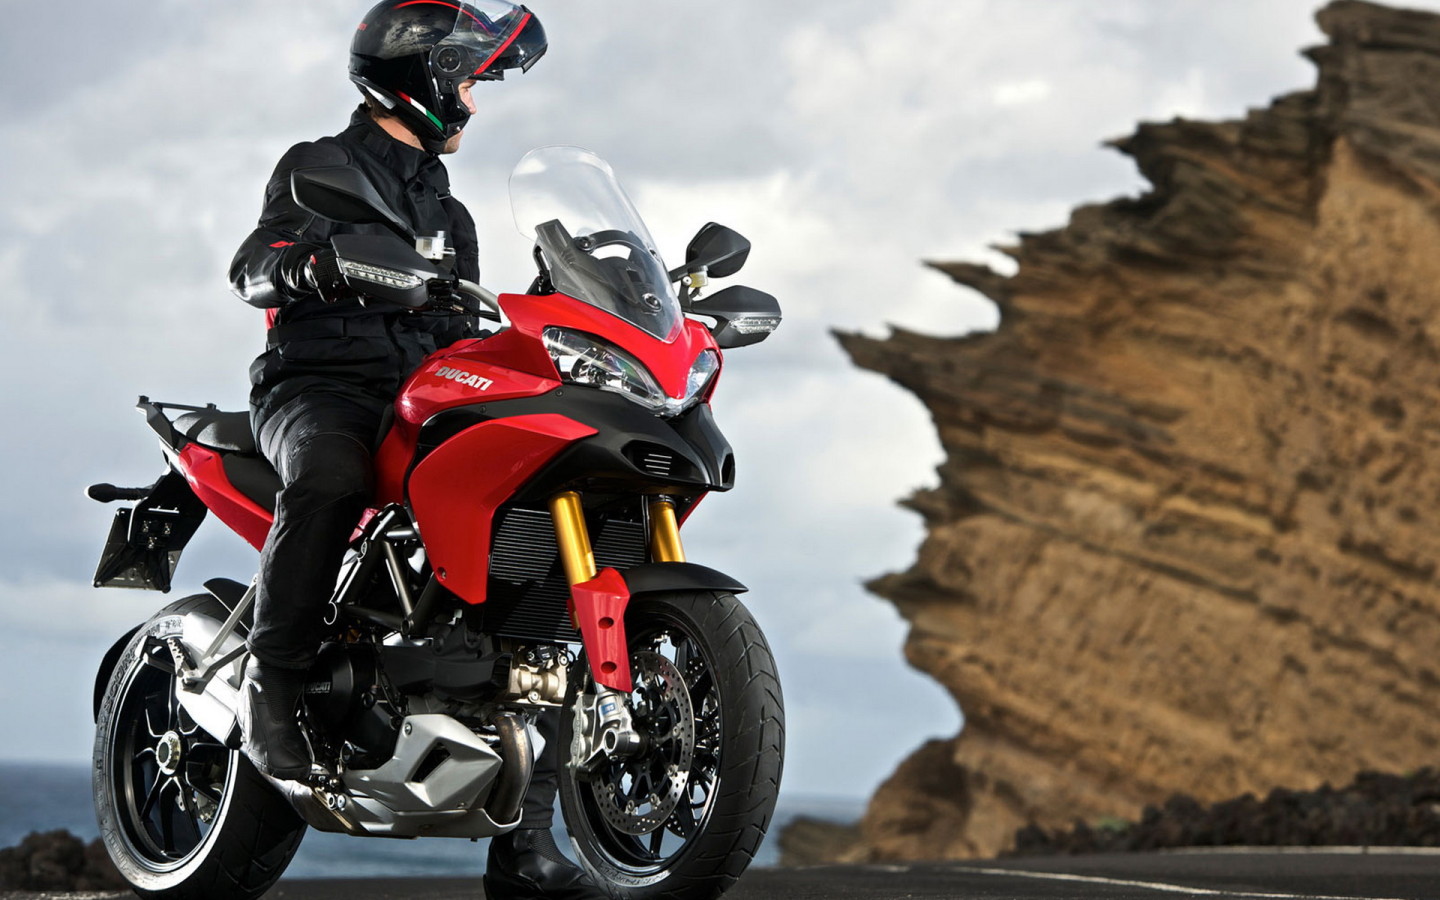 Motocycles_Ducati_Ducati_Multistrada_1200S_021556_.jpg